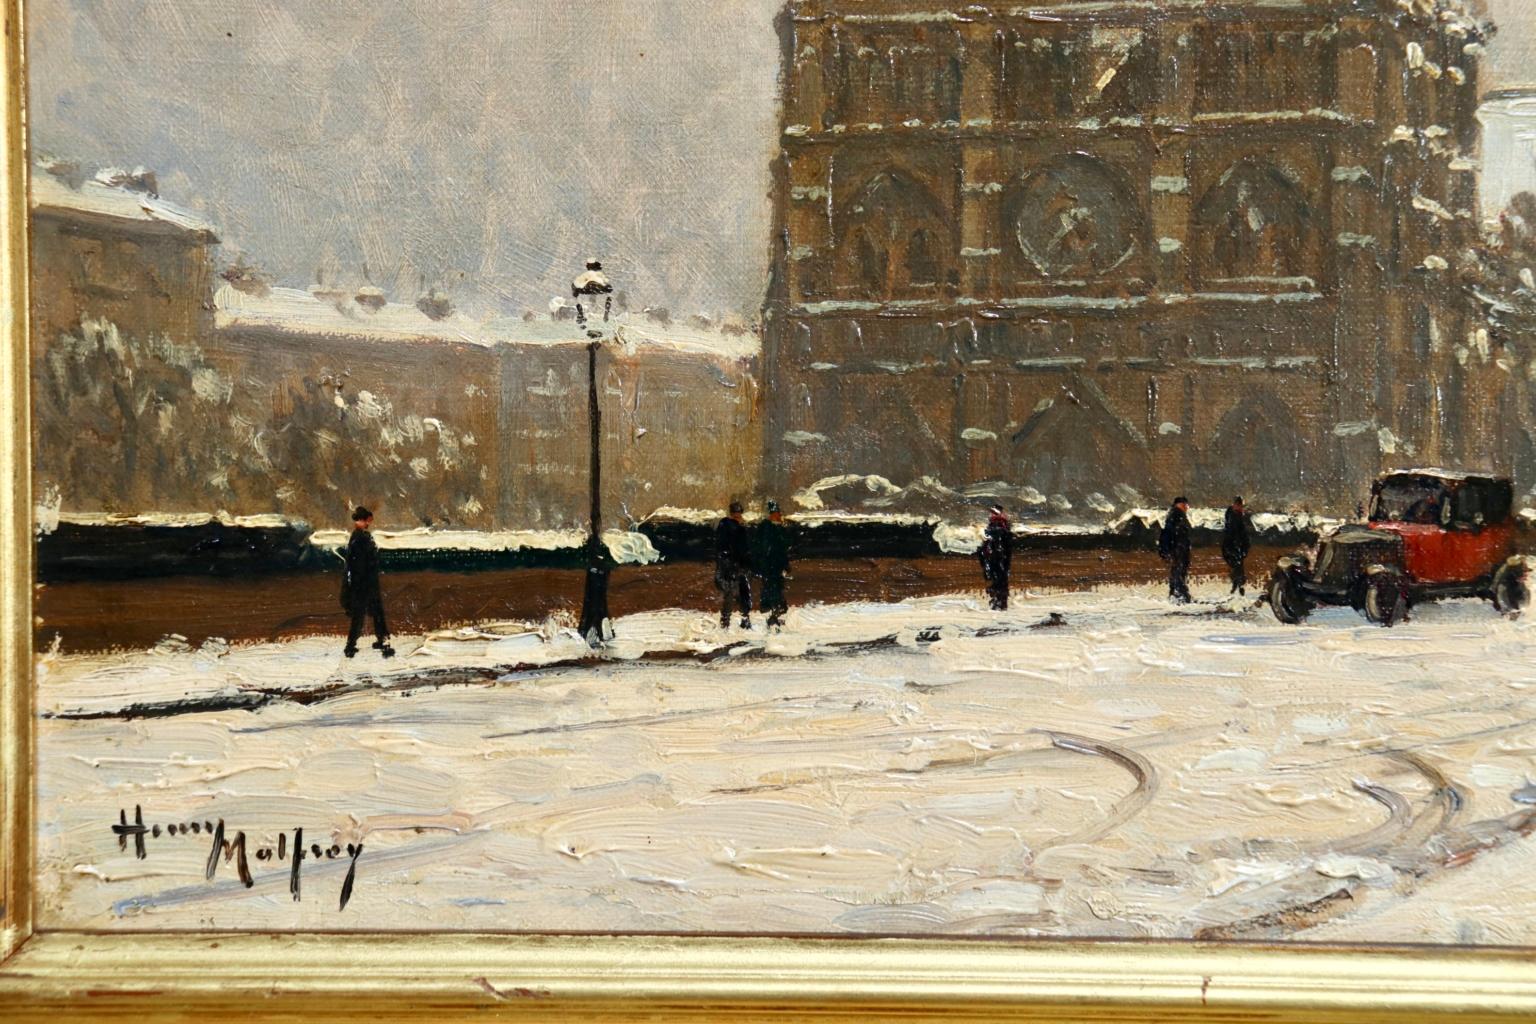 Notre Dame sur la neige - Paris - Figures in Winter Landscape by Henry Malfroy 1